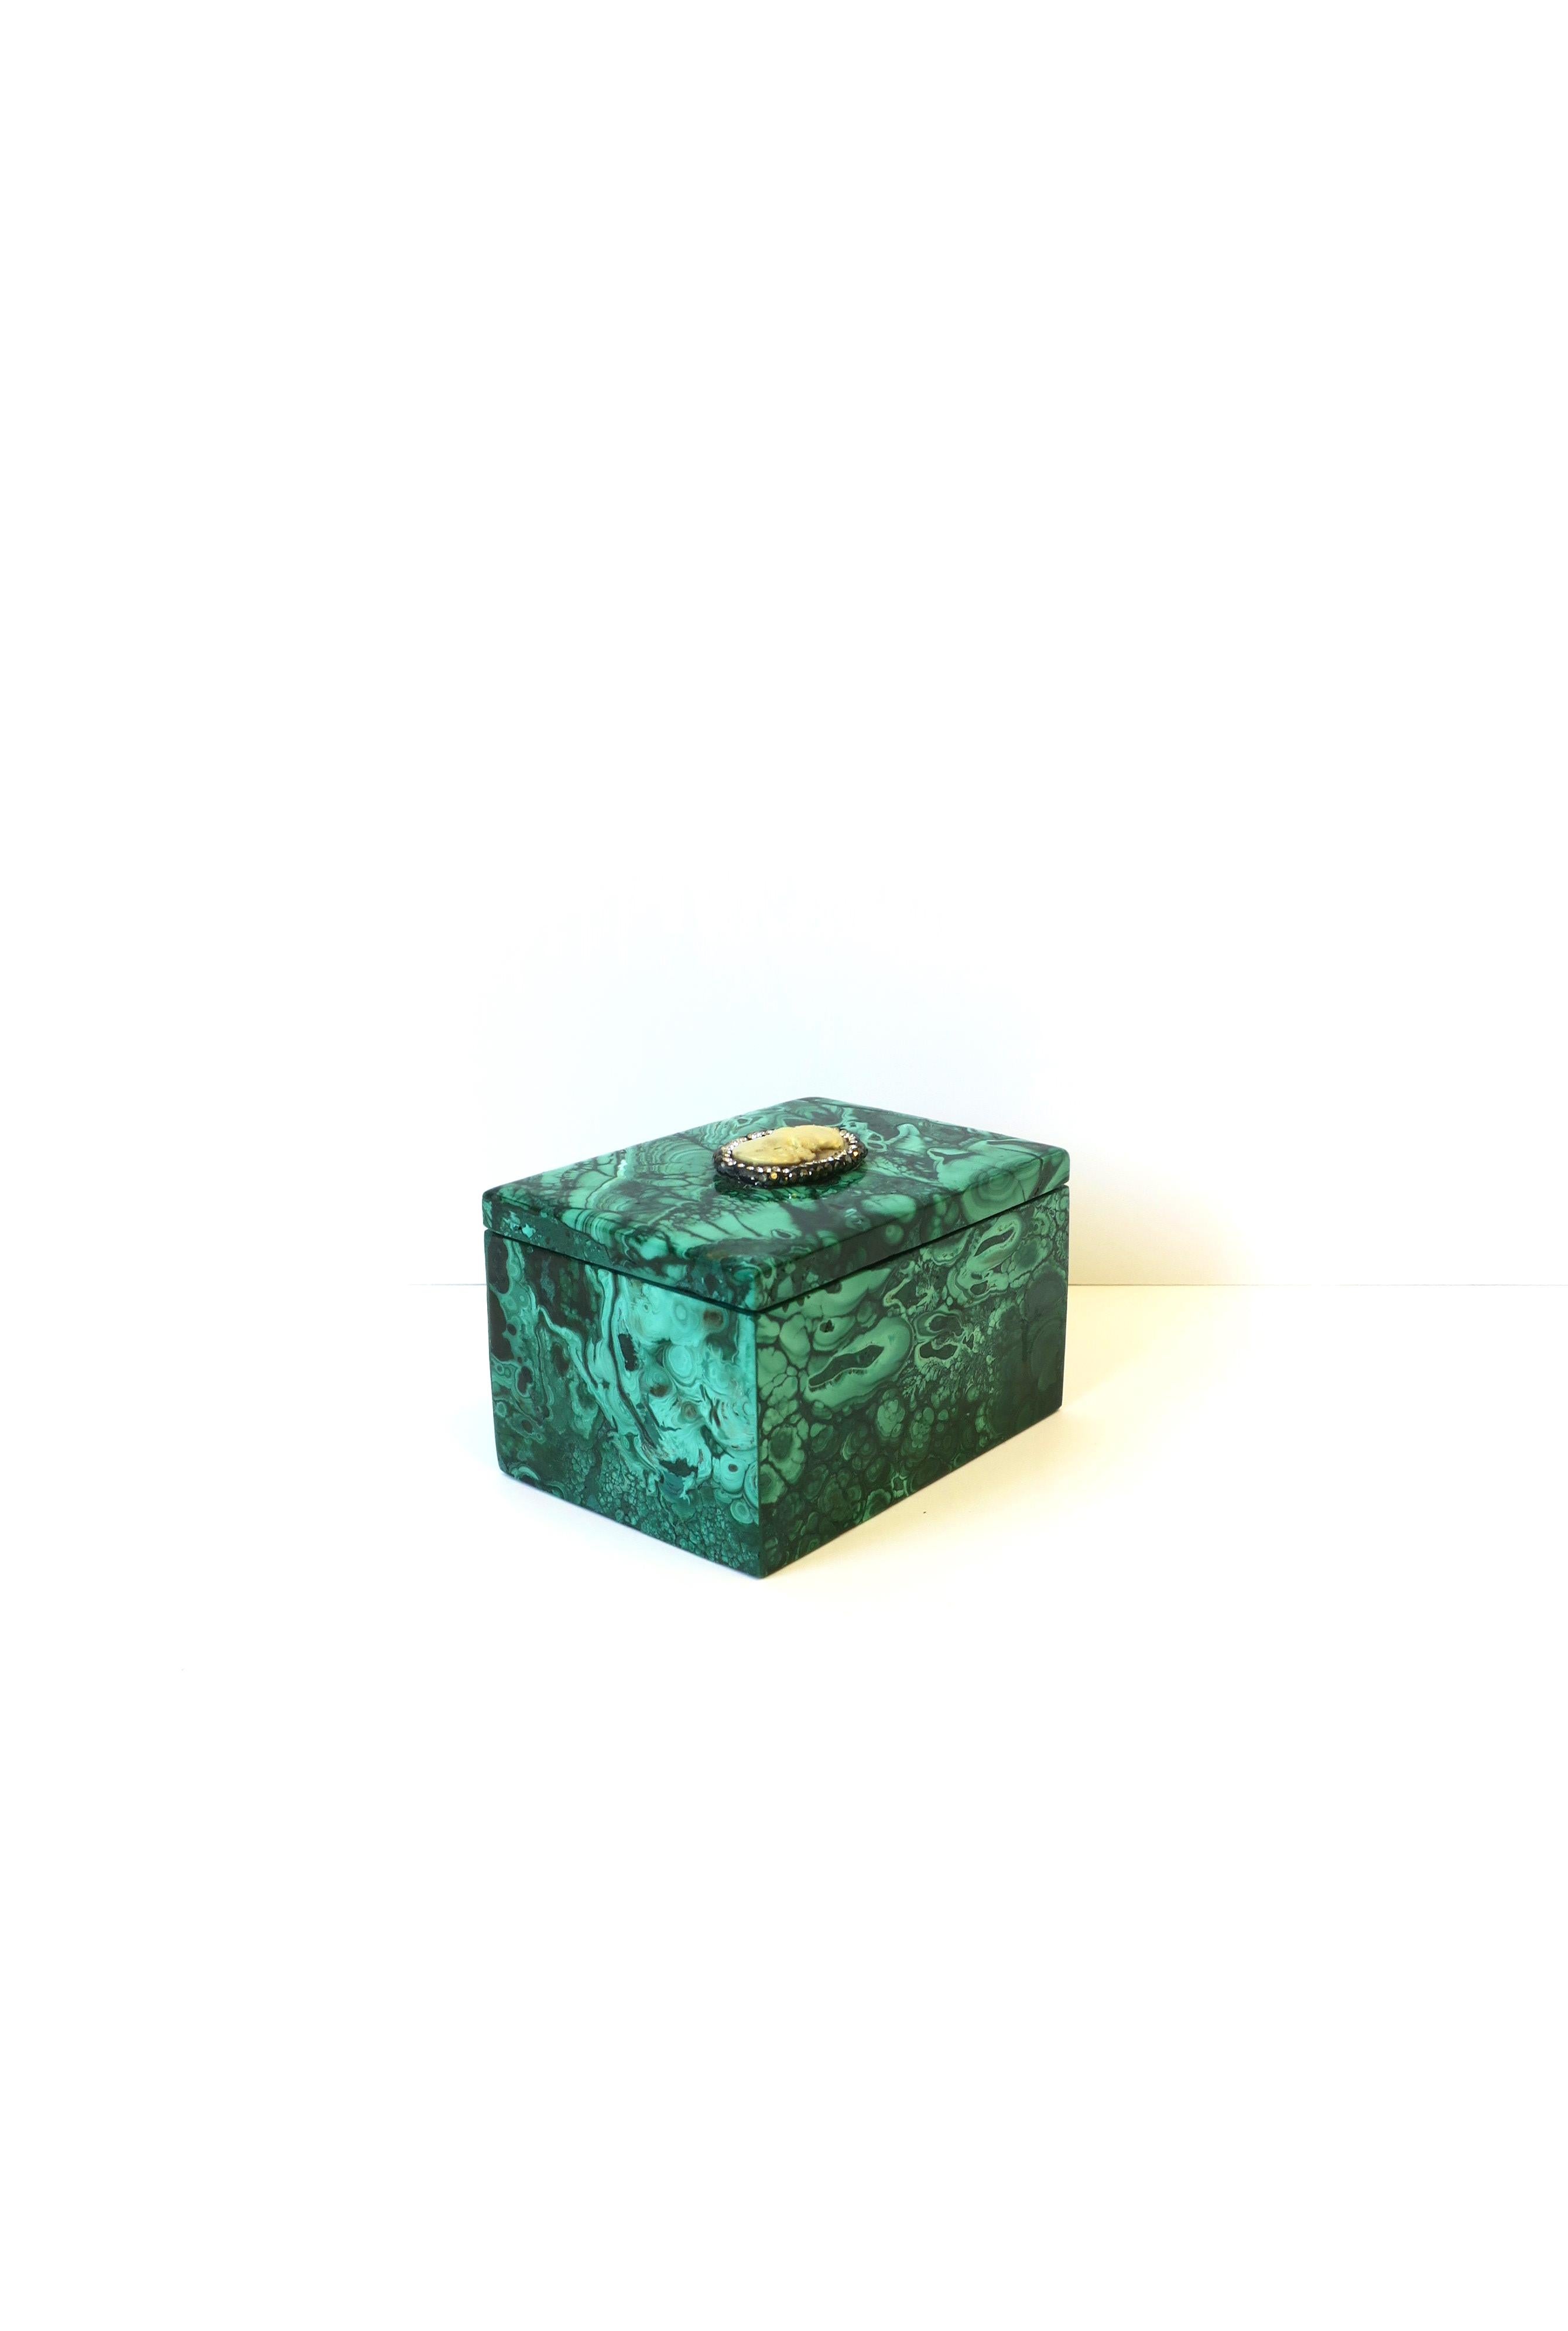 Neoclassical Malachite Jewelry Box with Cameo Design For Sale